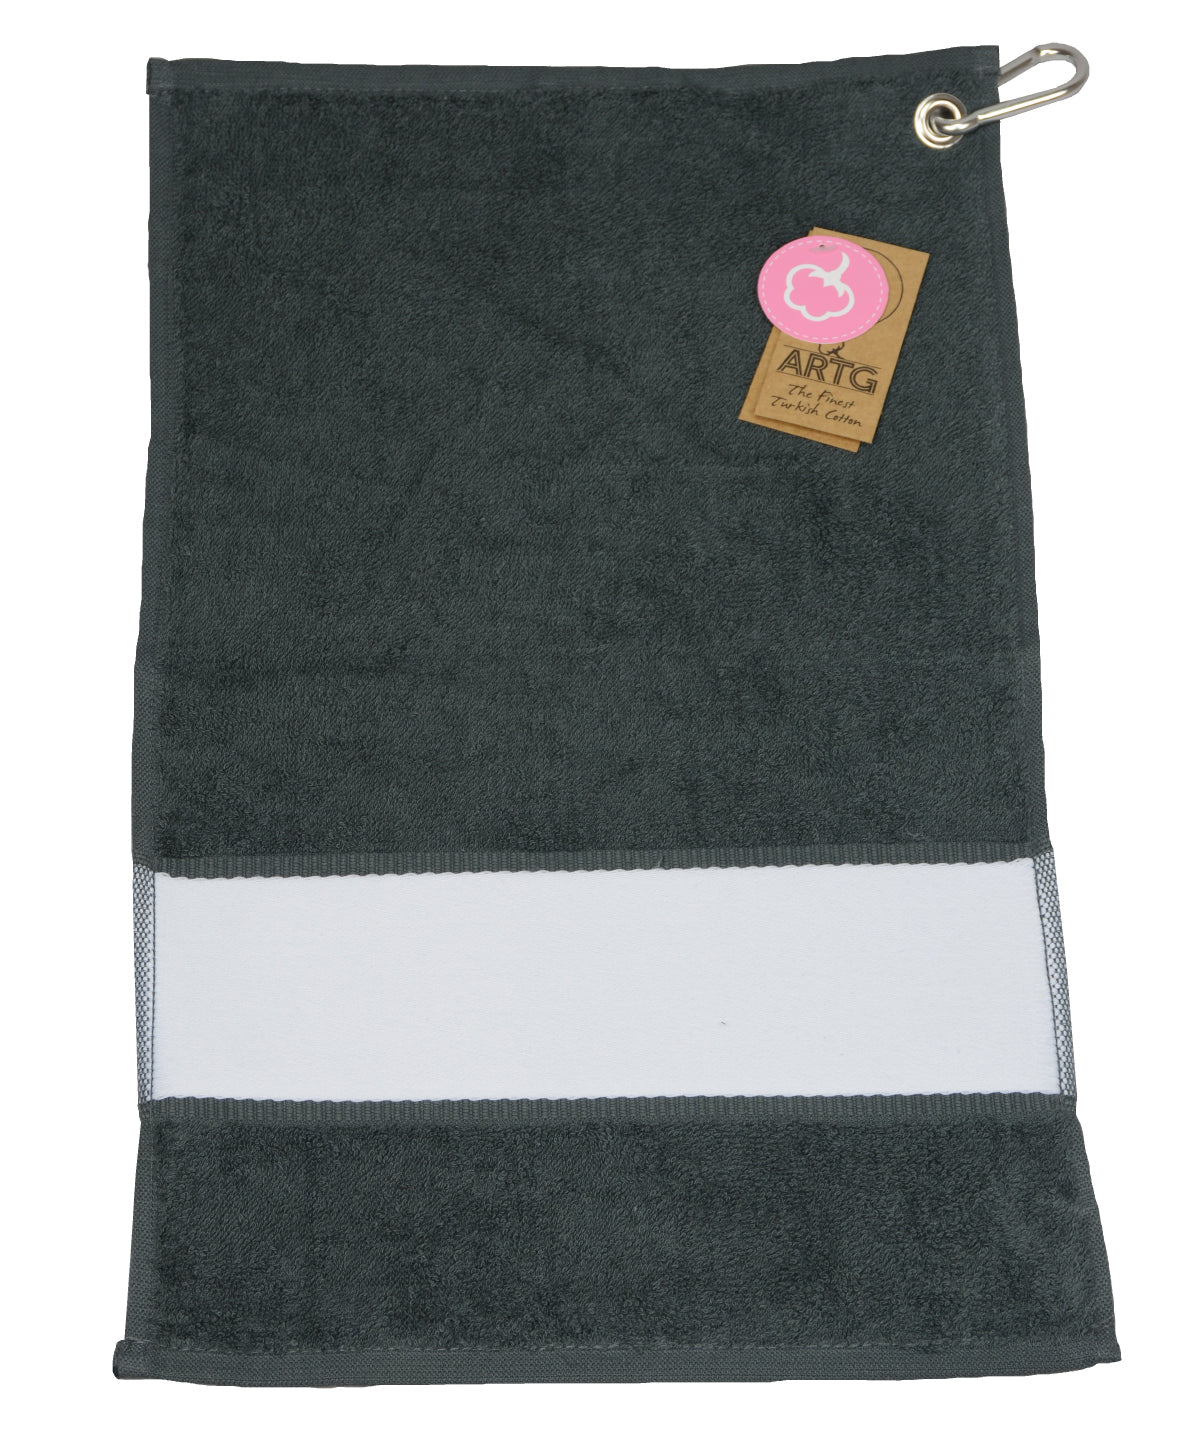 Personalised Towels - Dark Grey A&R Towels ARTG® SUBLI-Me® golf towel